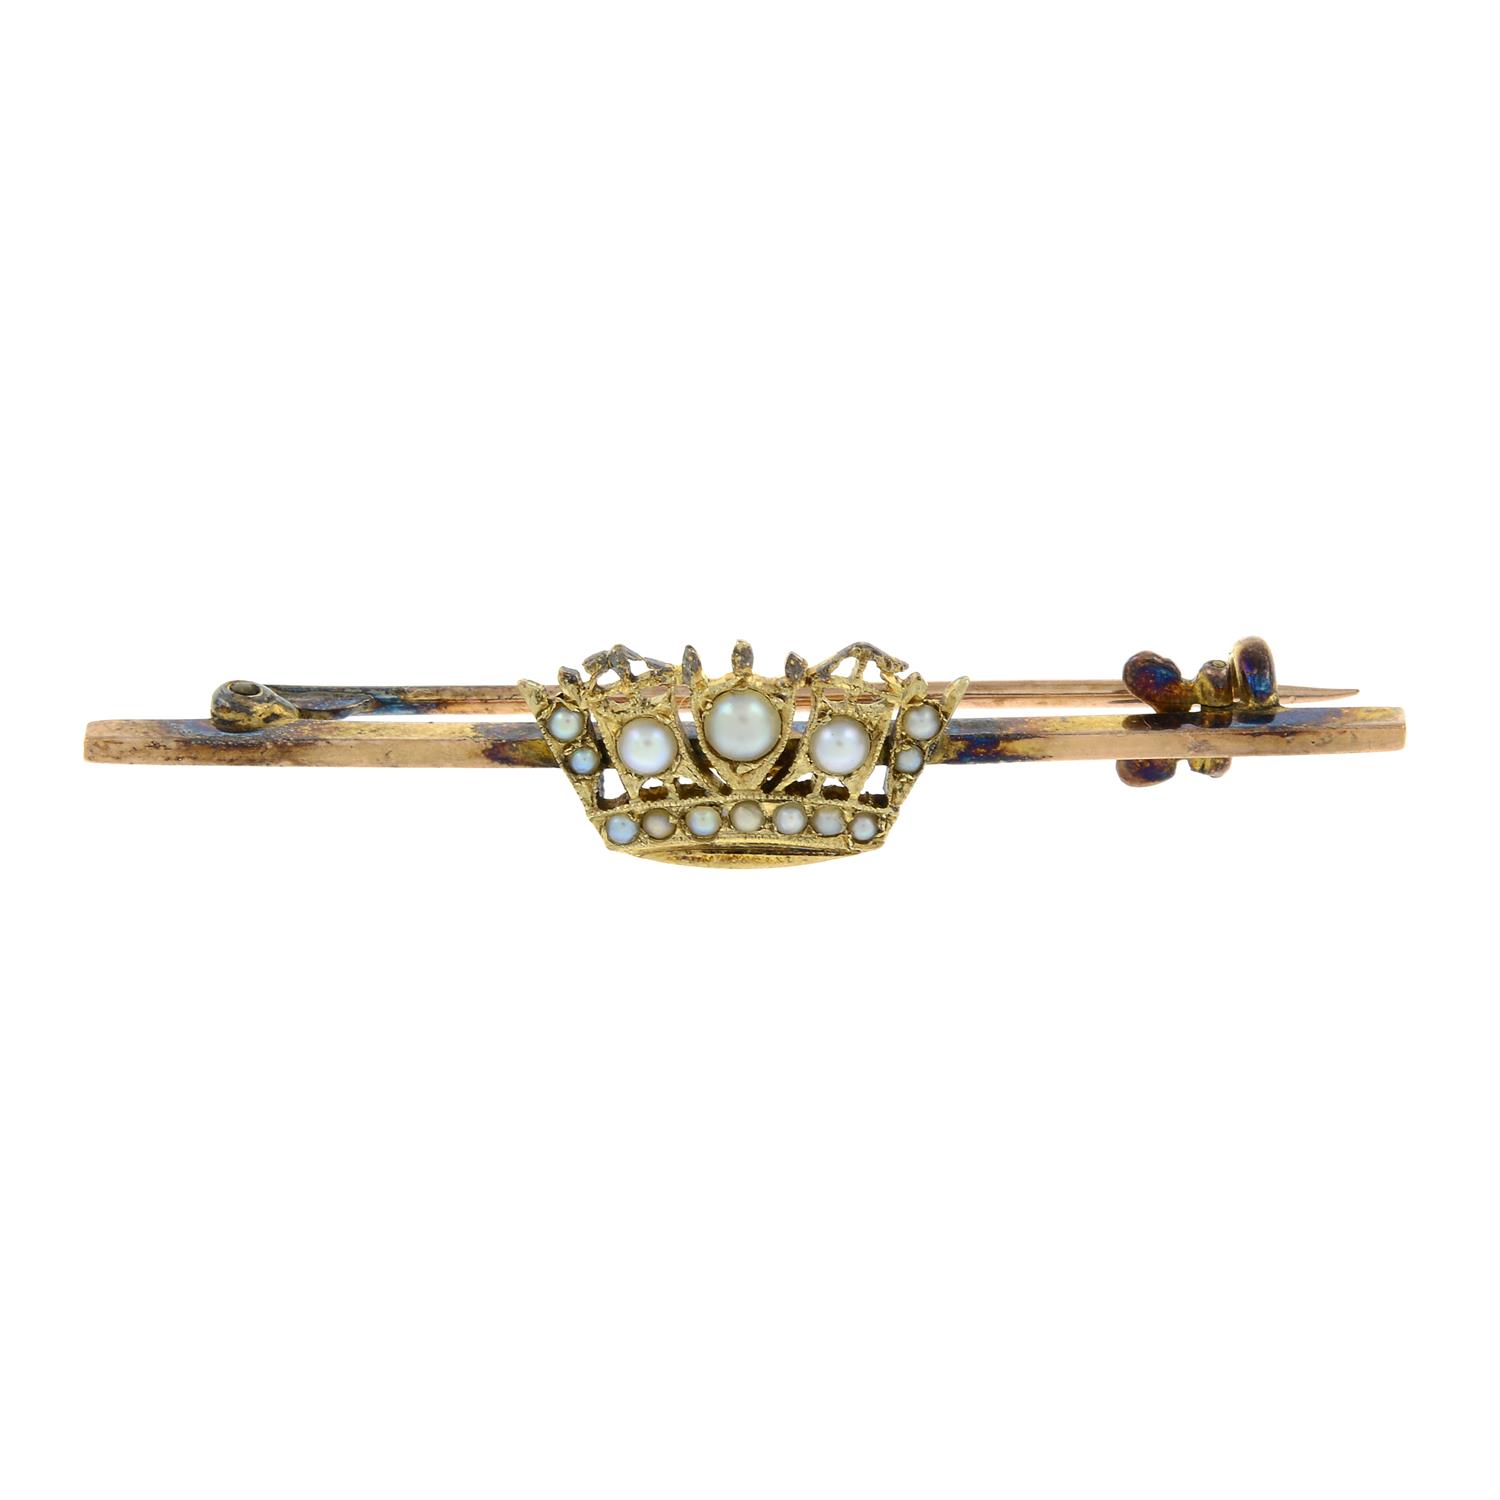 An early 20th century gold split pearl Royal Navy bar brooch.